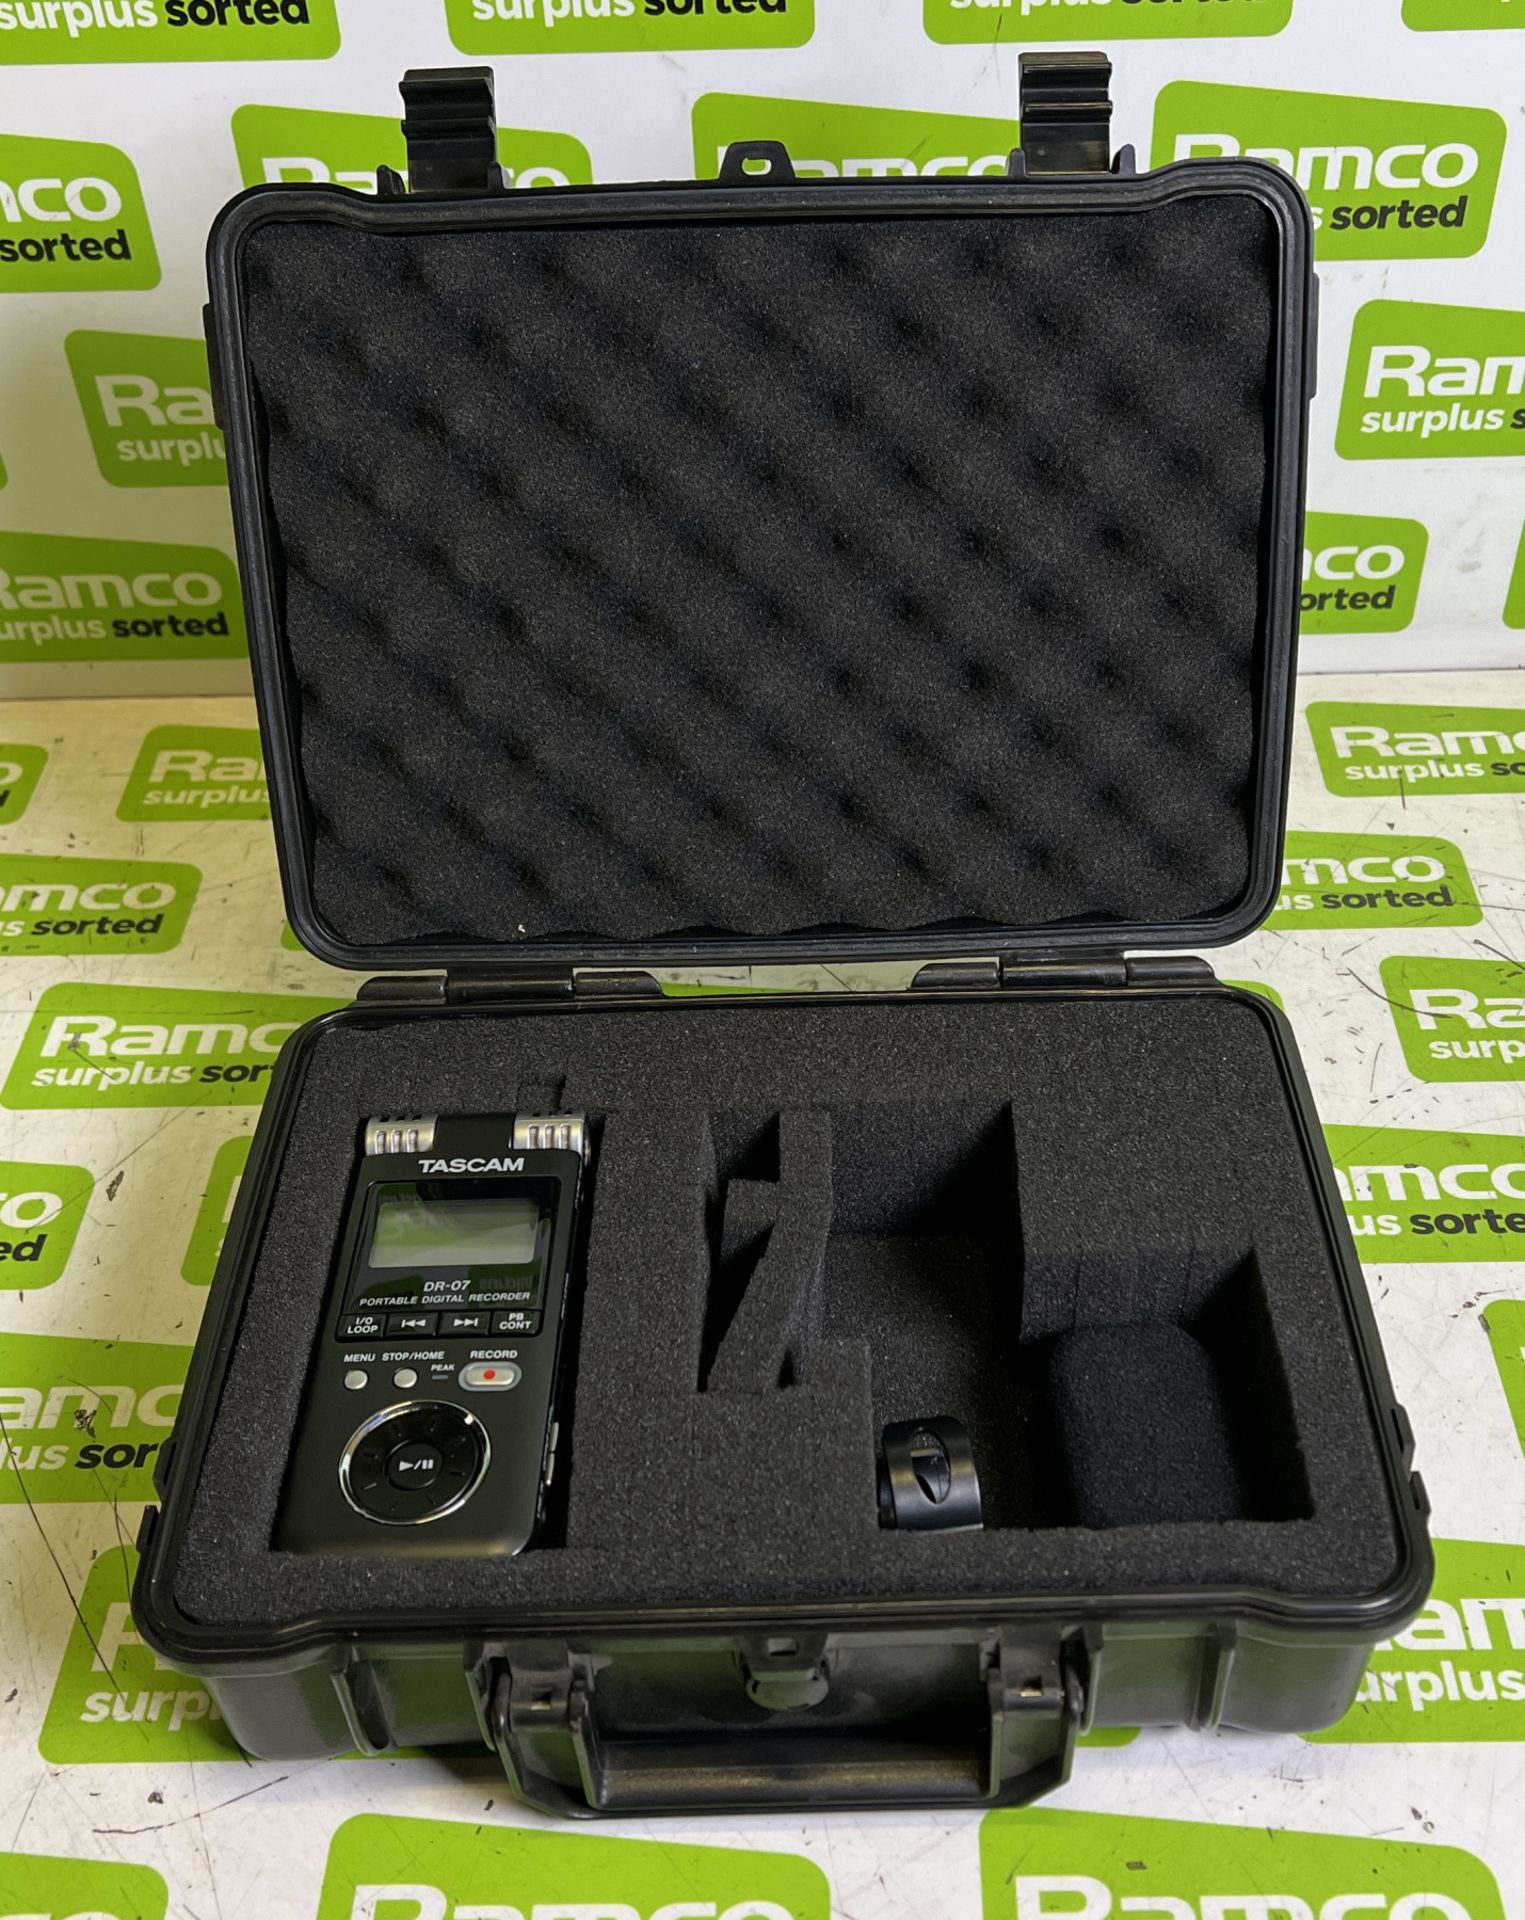 Tascam DR-07 digital audio recorder in case